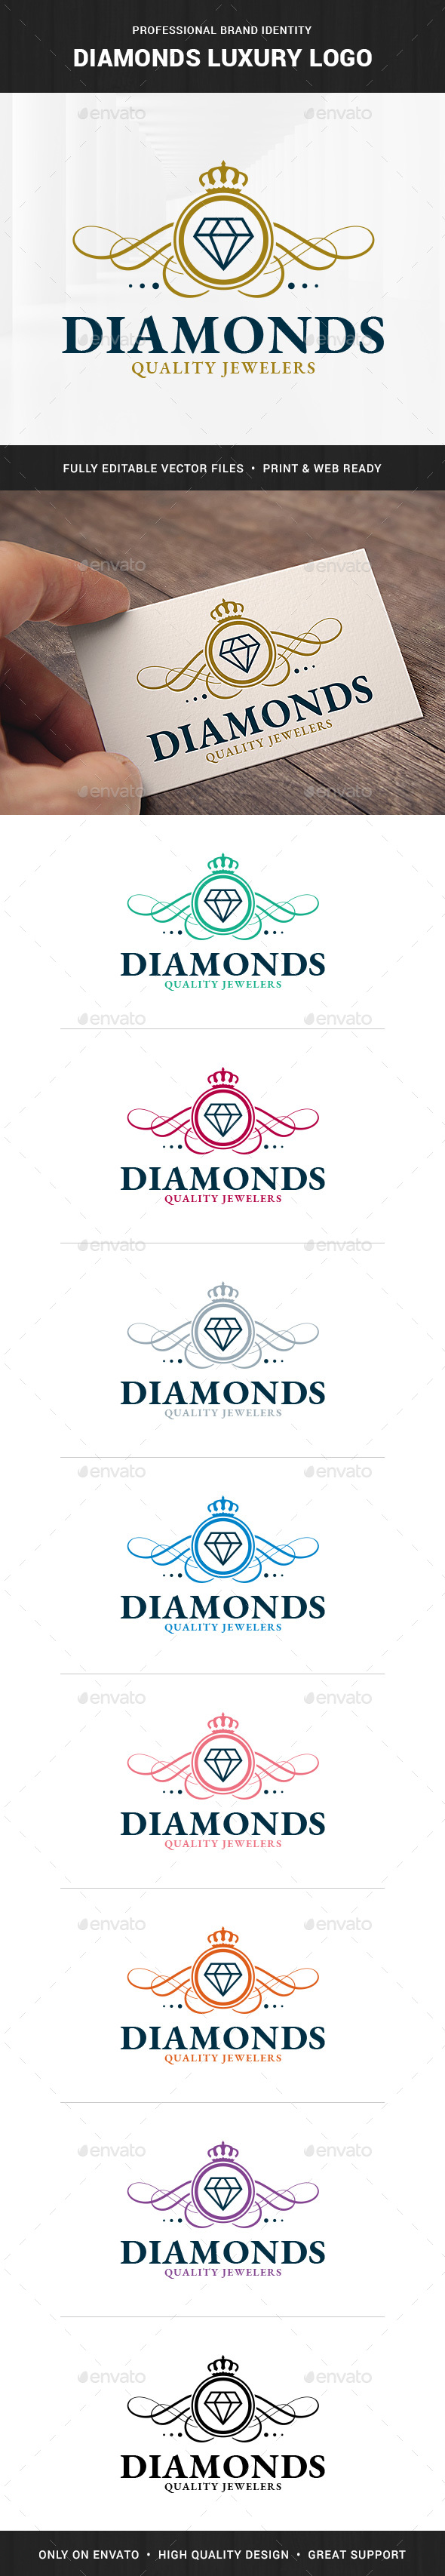 Diamonds Luxury Logo Template